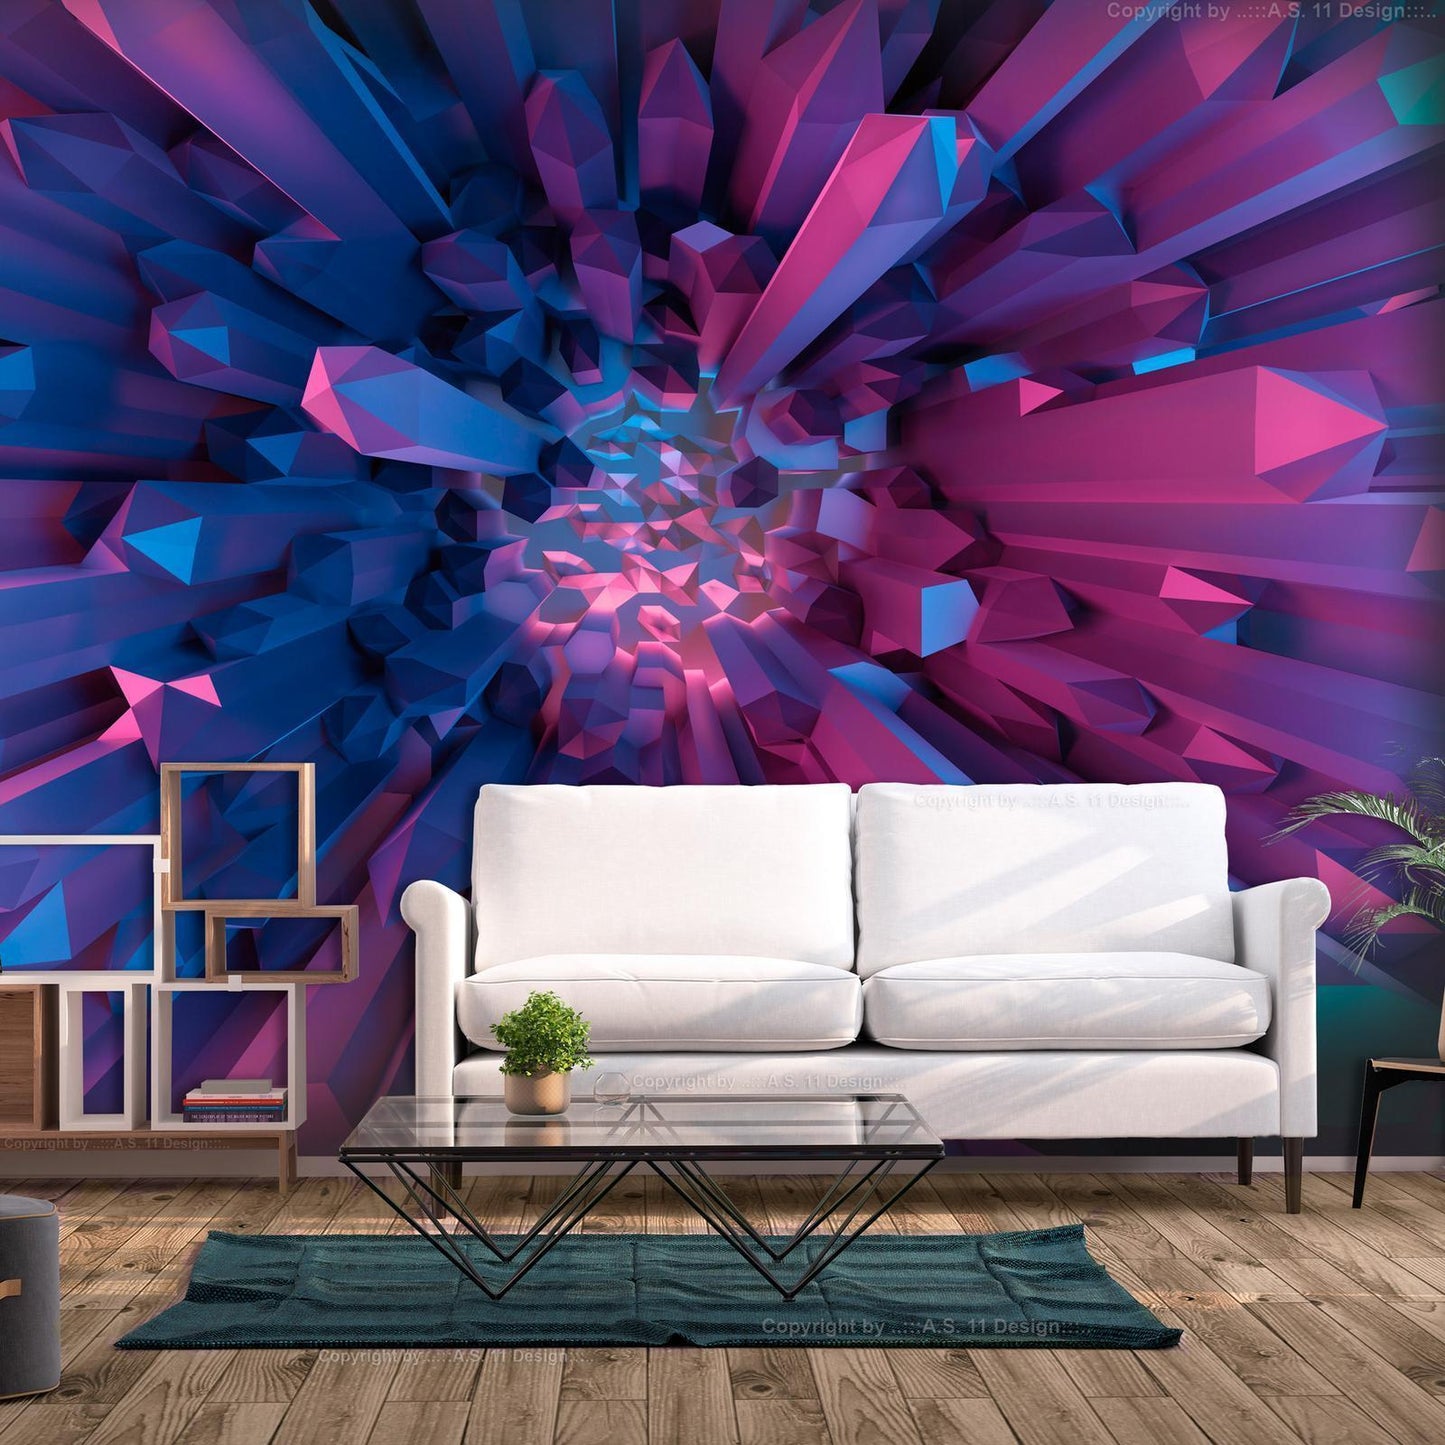 Fotobehang - Crystal - geometric fantasy with 3D elements in purple tones